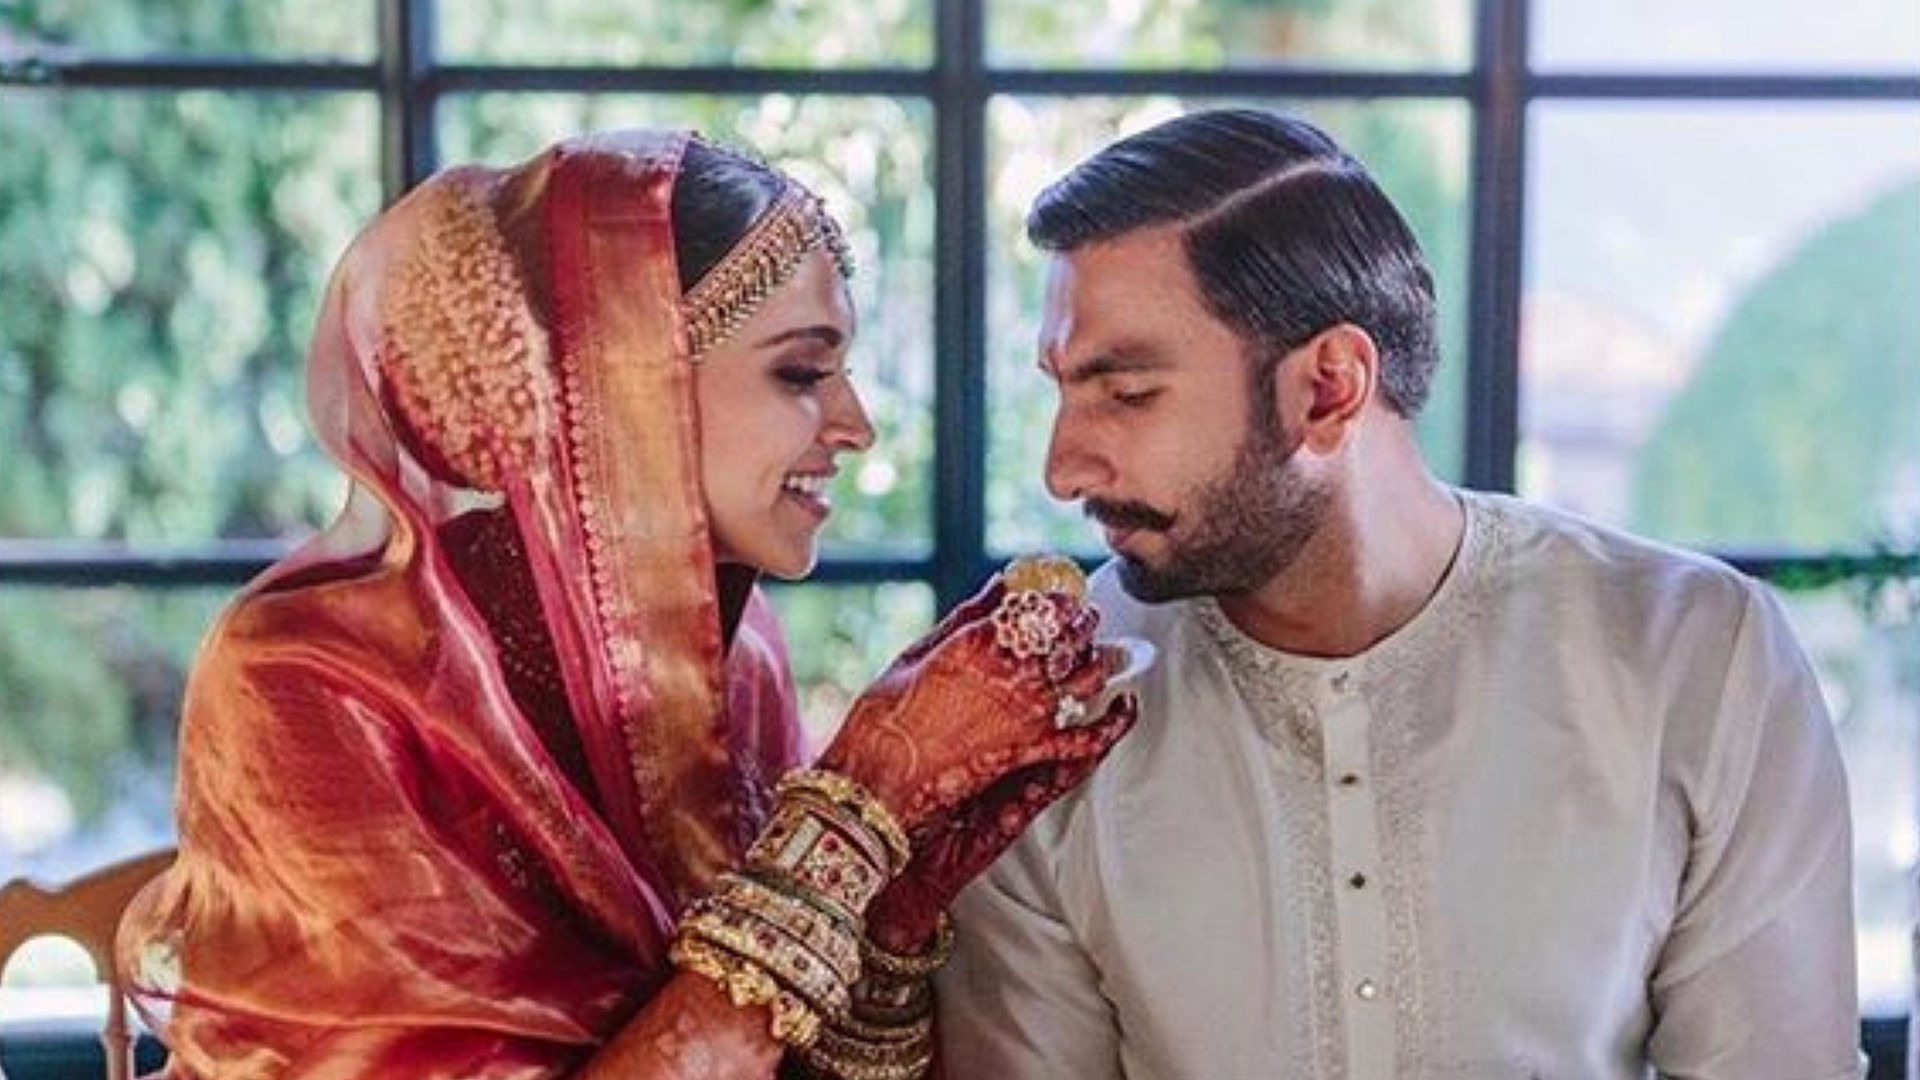 Ranveer Singh and Deepika Padukone posted new wedding pictures on their social media.